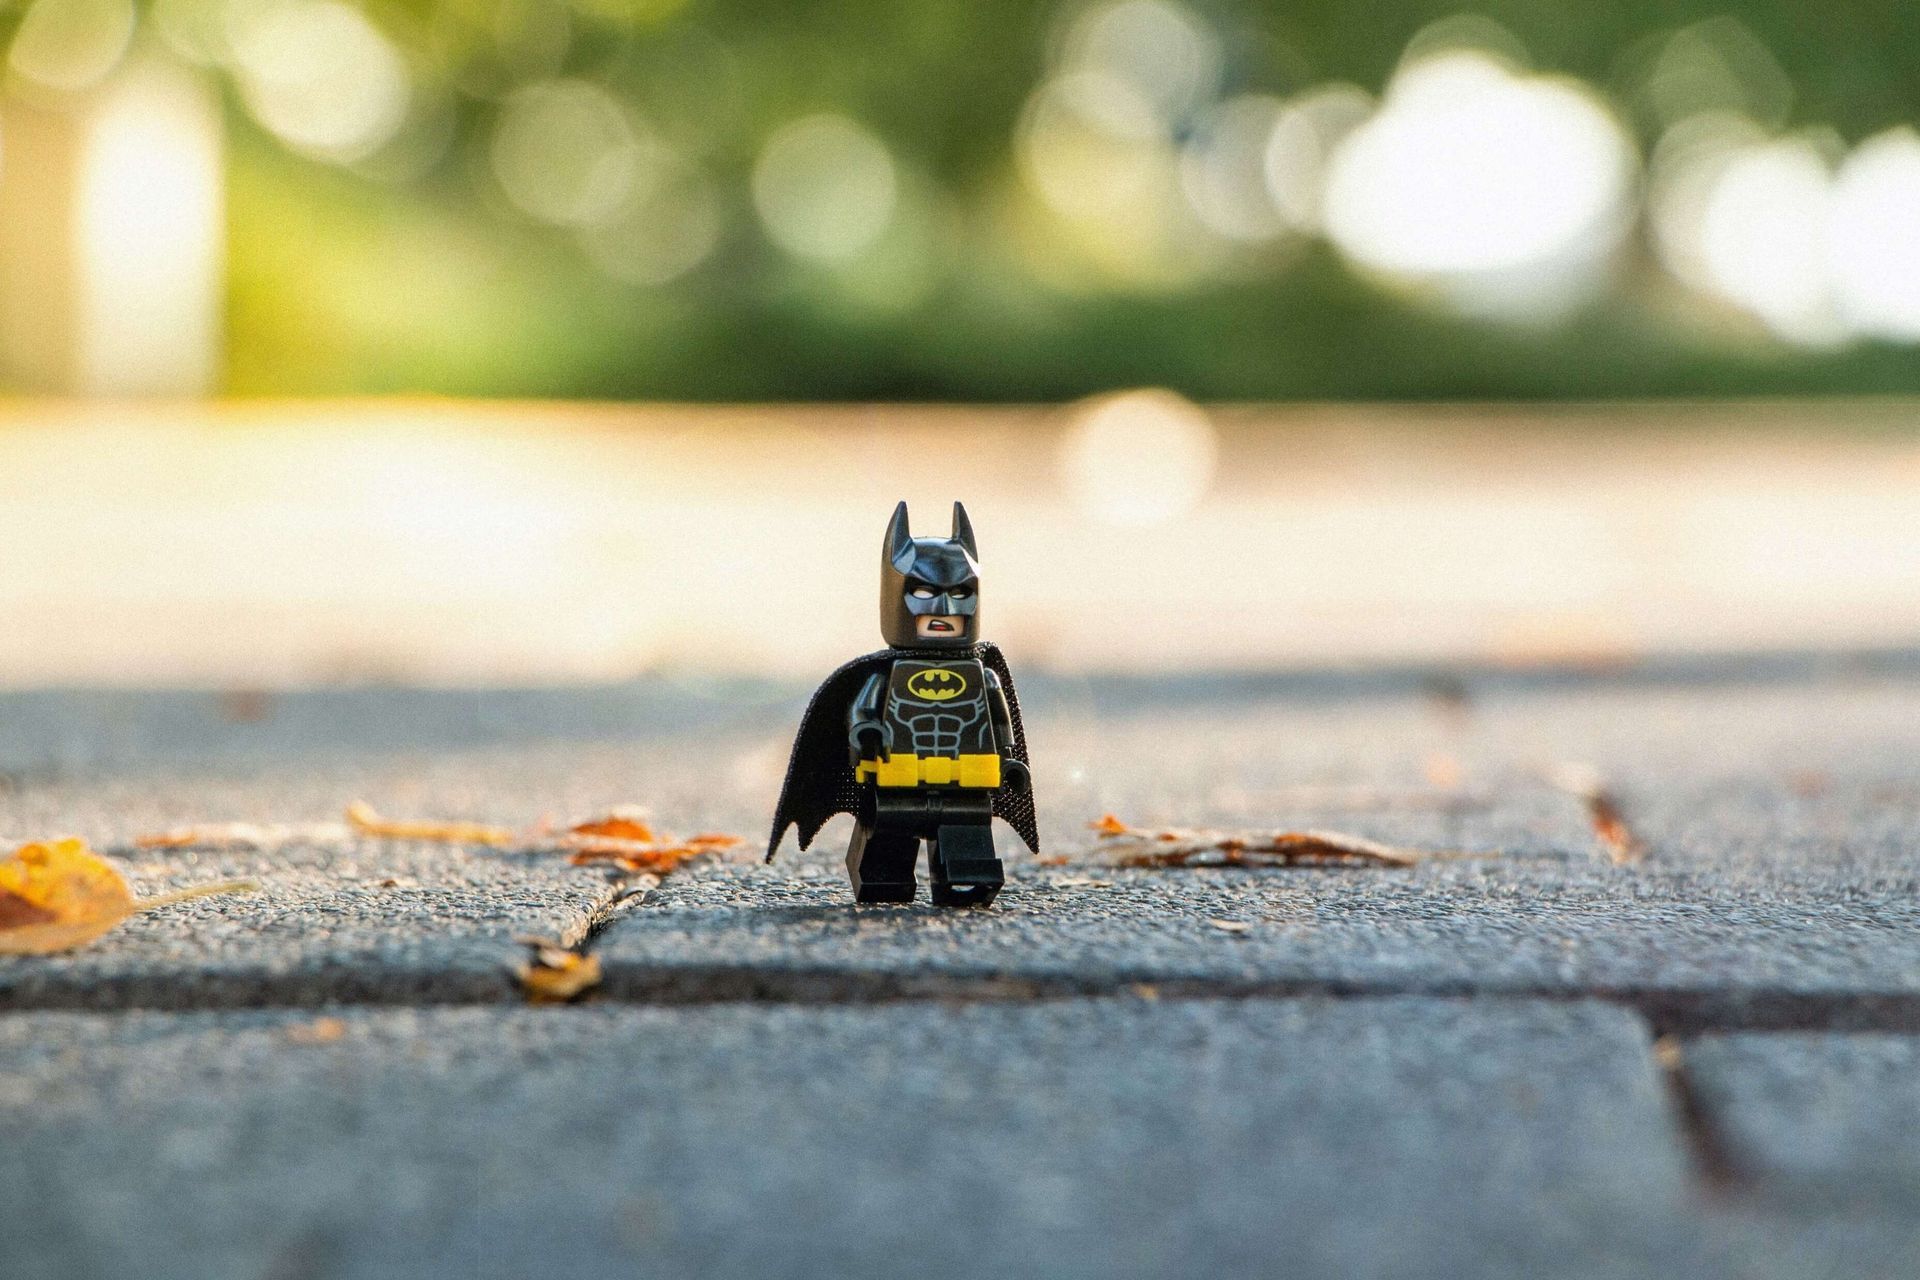 lego batman standing on a pavement